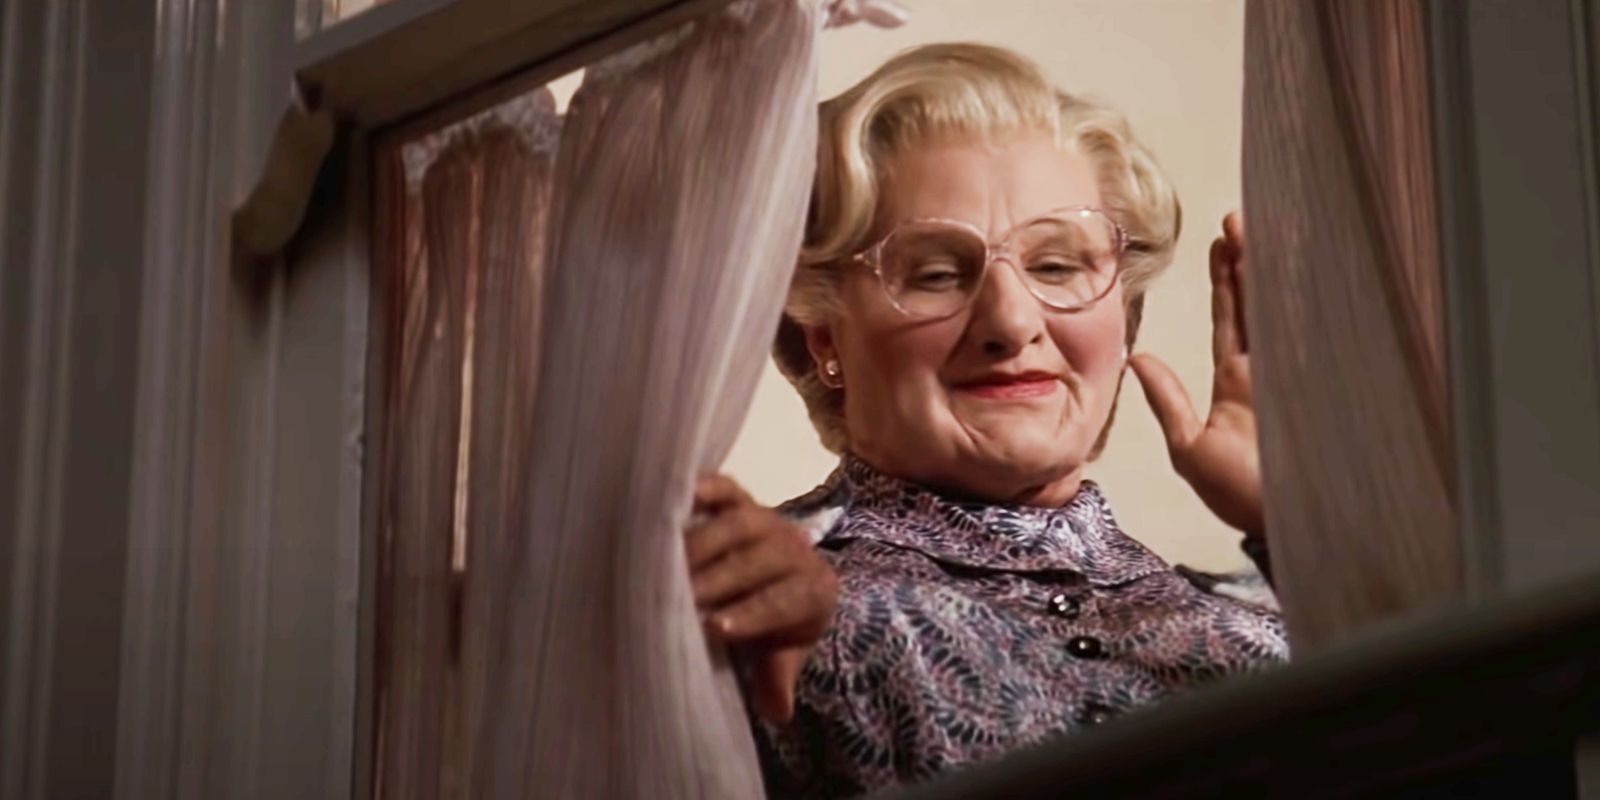 Robin Williams as Mrs. Doubtfire waving from a window